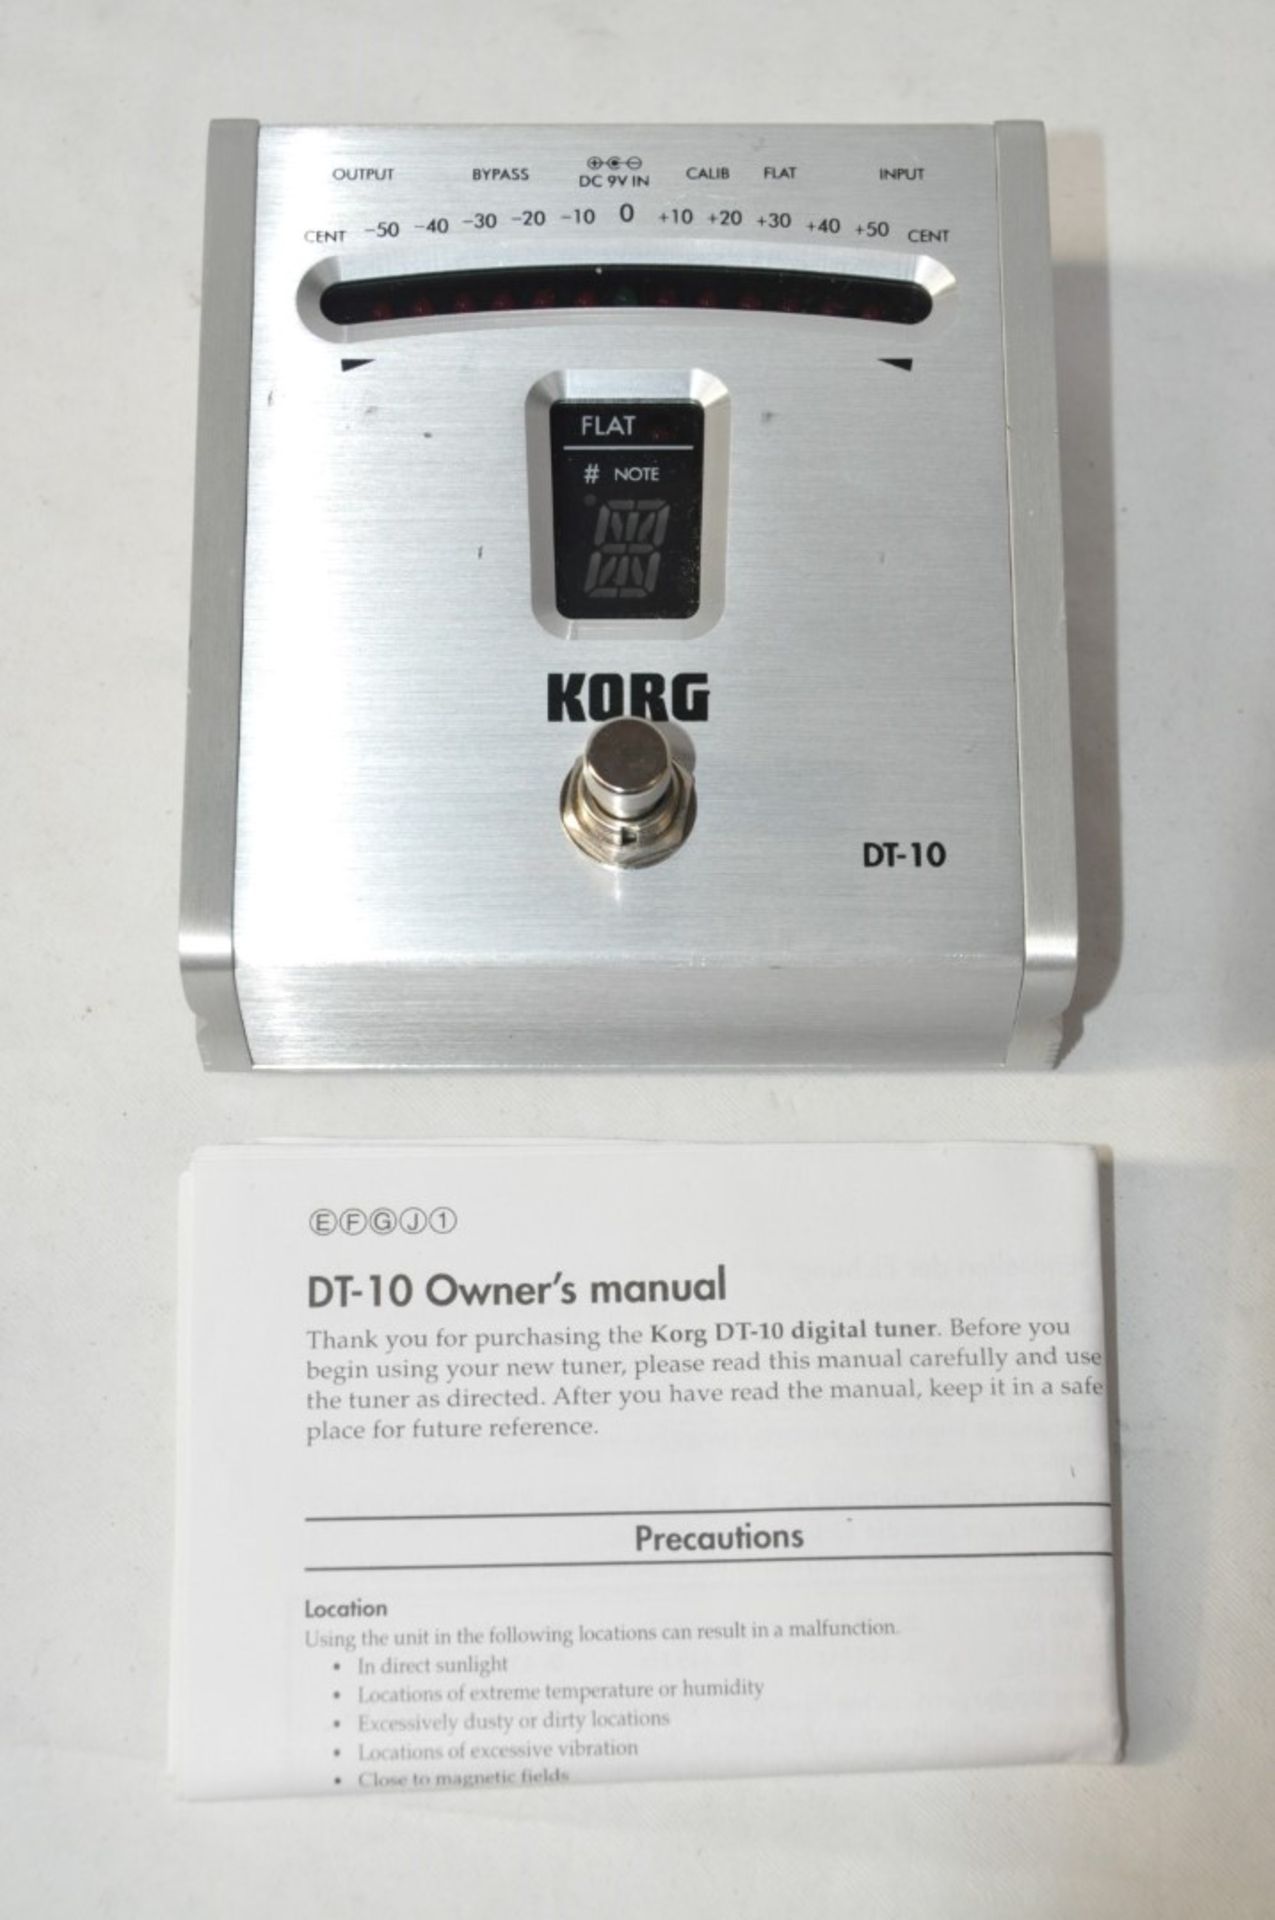 1 x Korg DT-10 Digital Chromatic Tuner - For Guitars and Bass Guitars - Model DT-10 - CL020 - Ref - Image 3 of 3